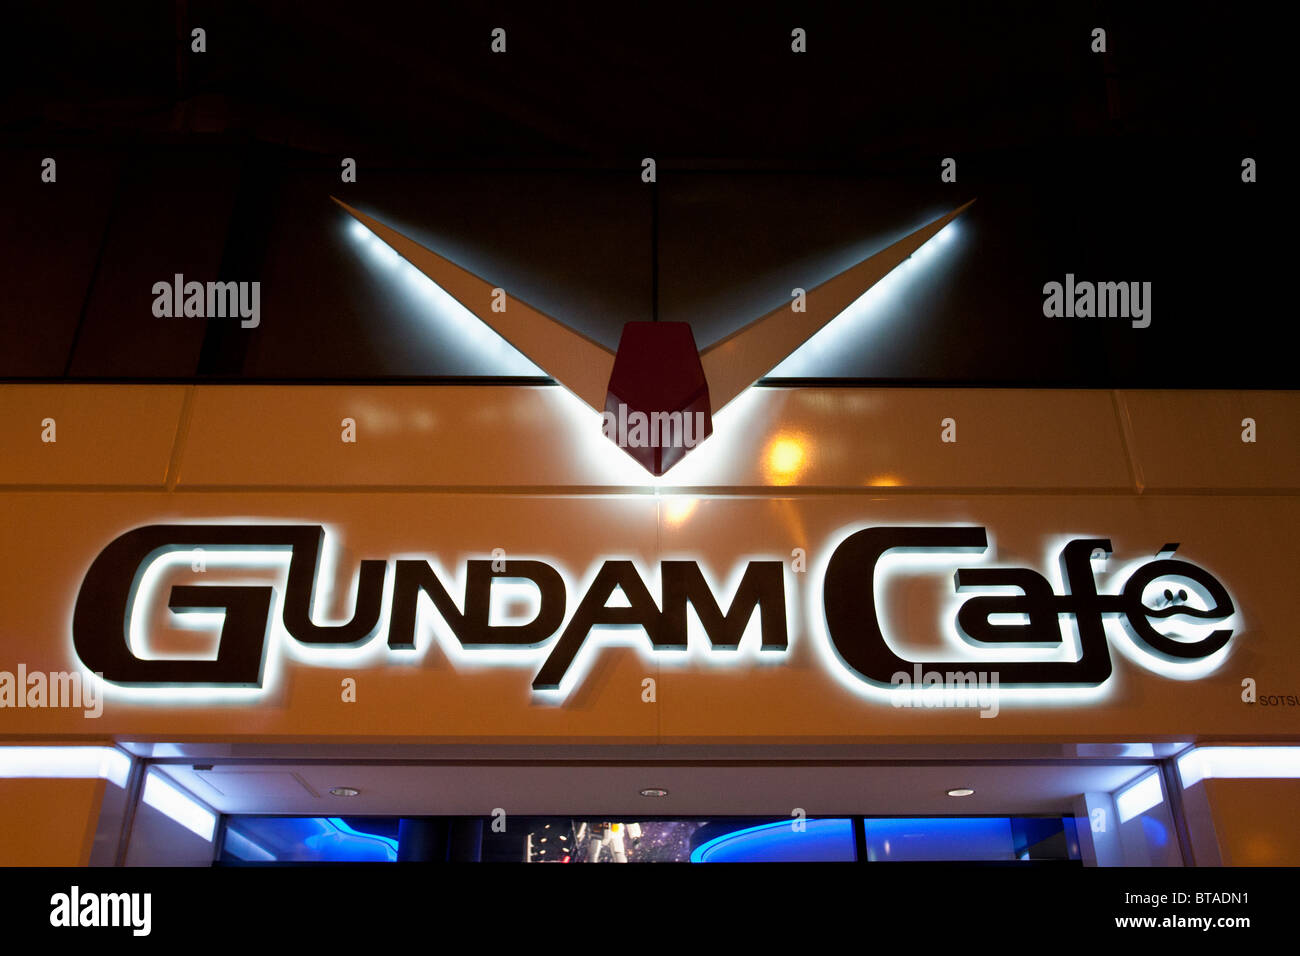 Gundam cafe, Akihabara. Stock Photo